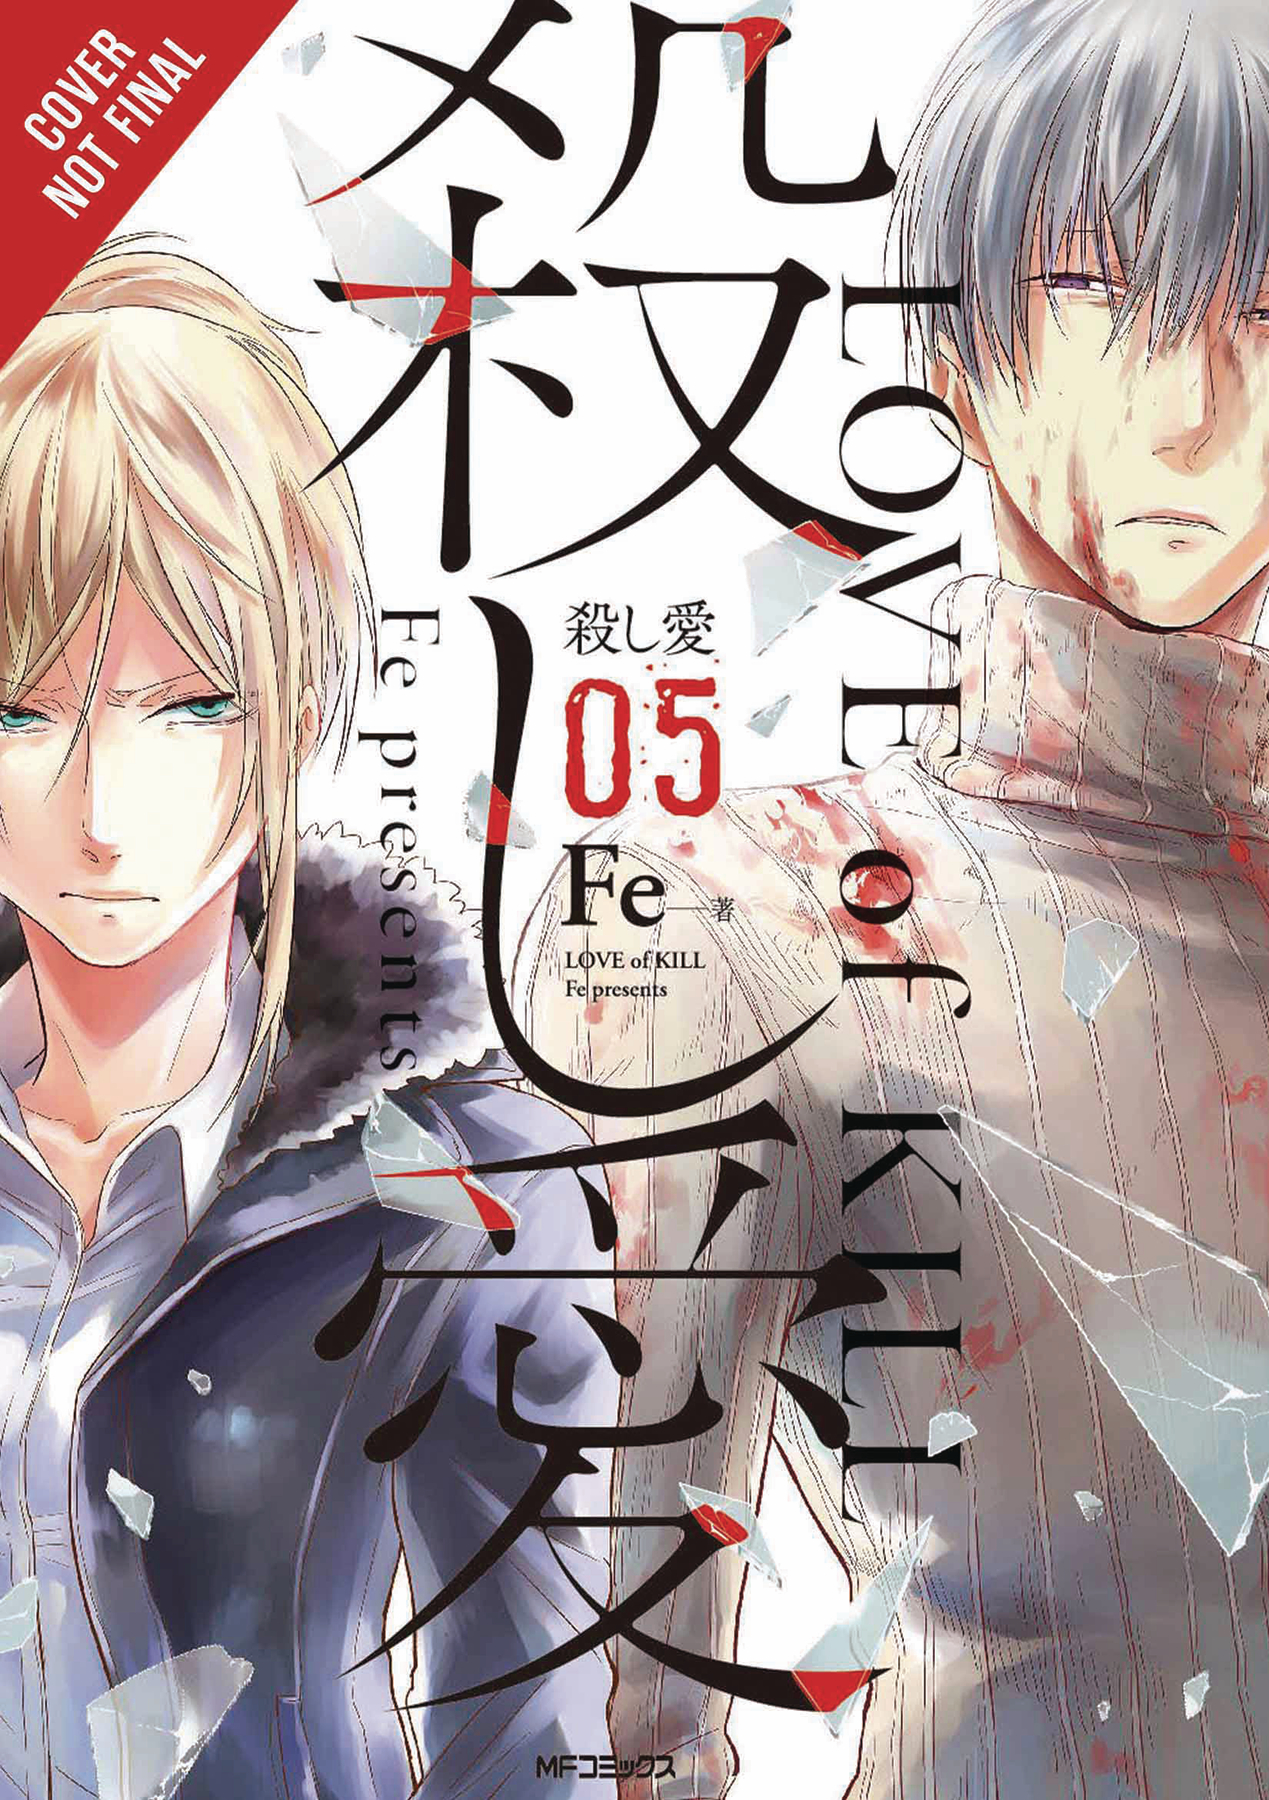 Love of Kill Volume 3 Manga Review  TheOASG